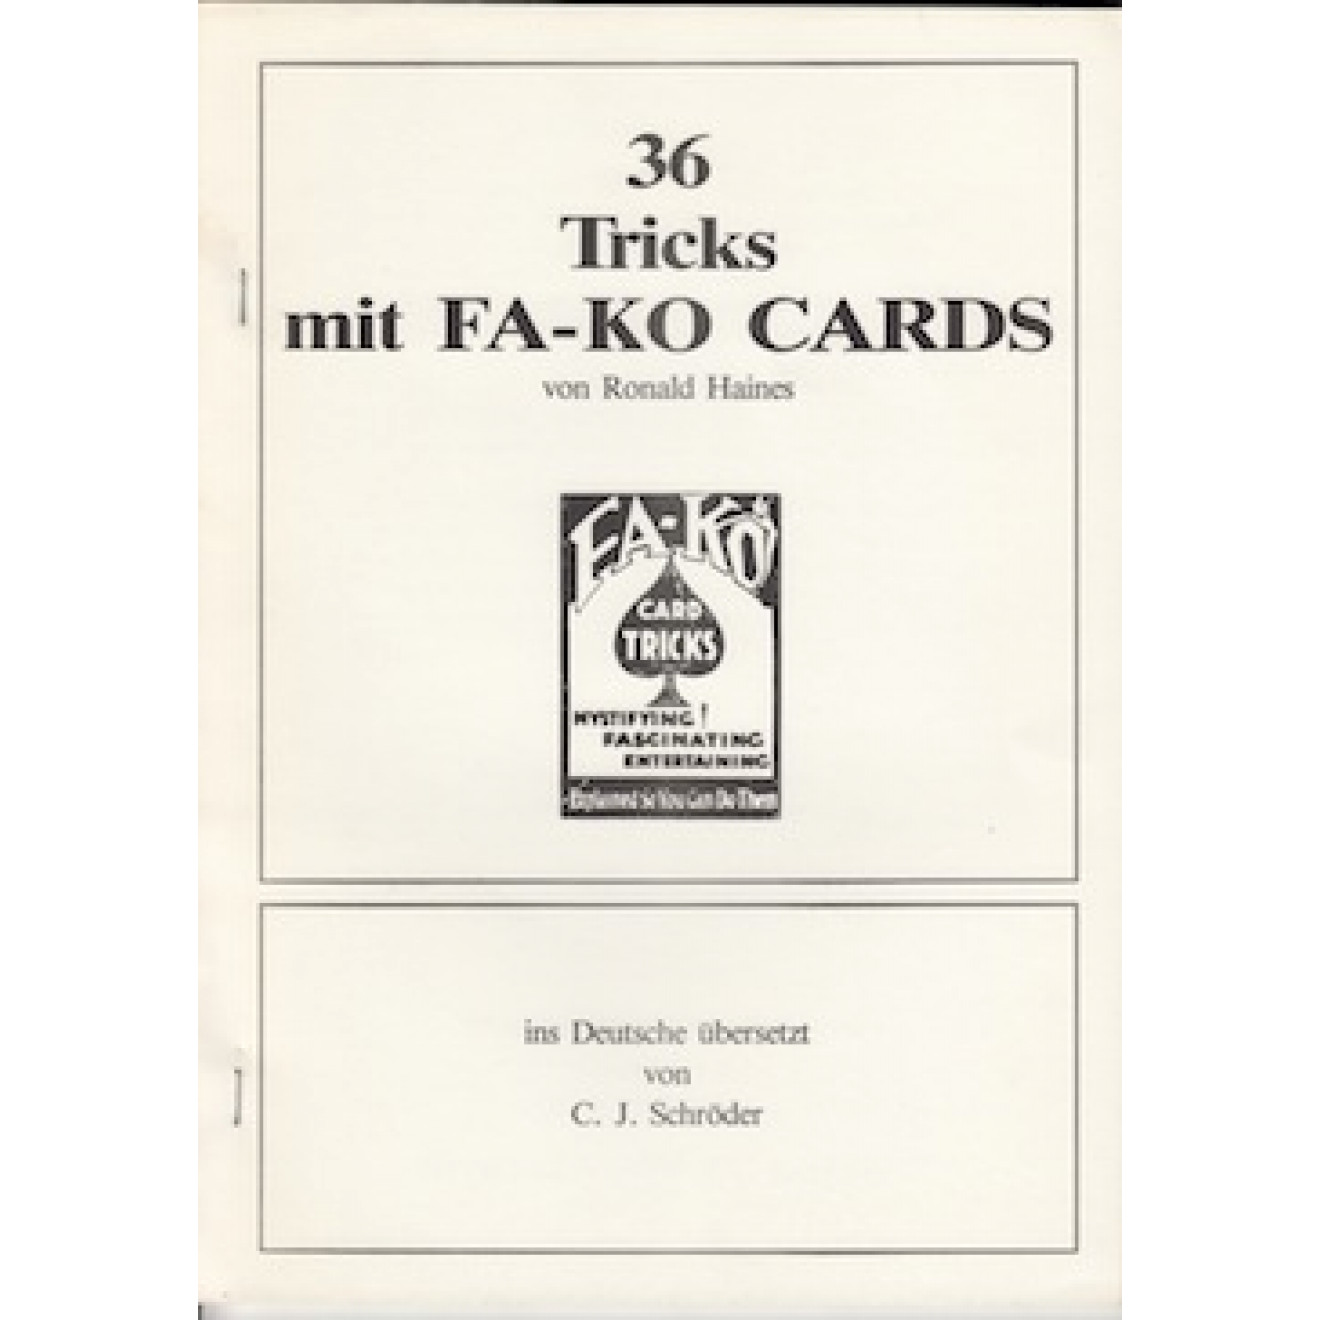 36 Tricks mit FA-KO Cards